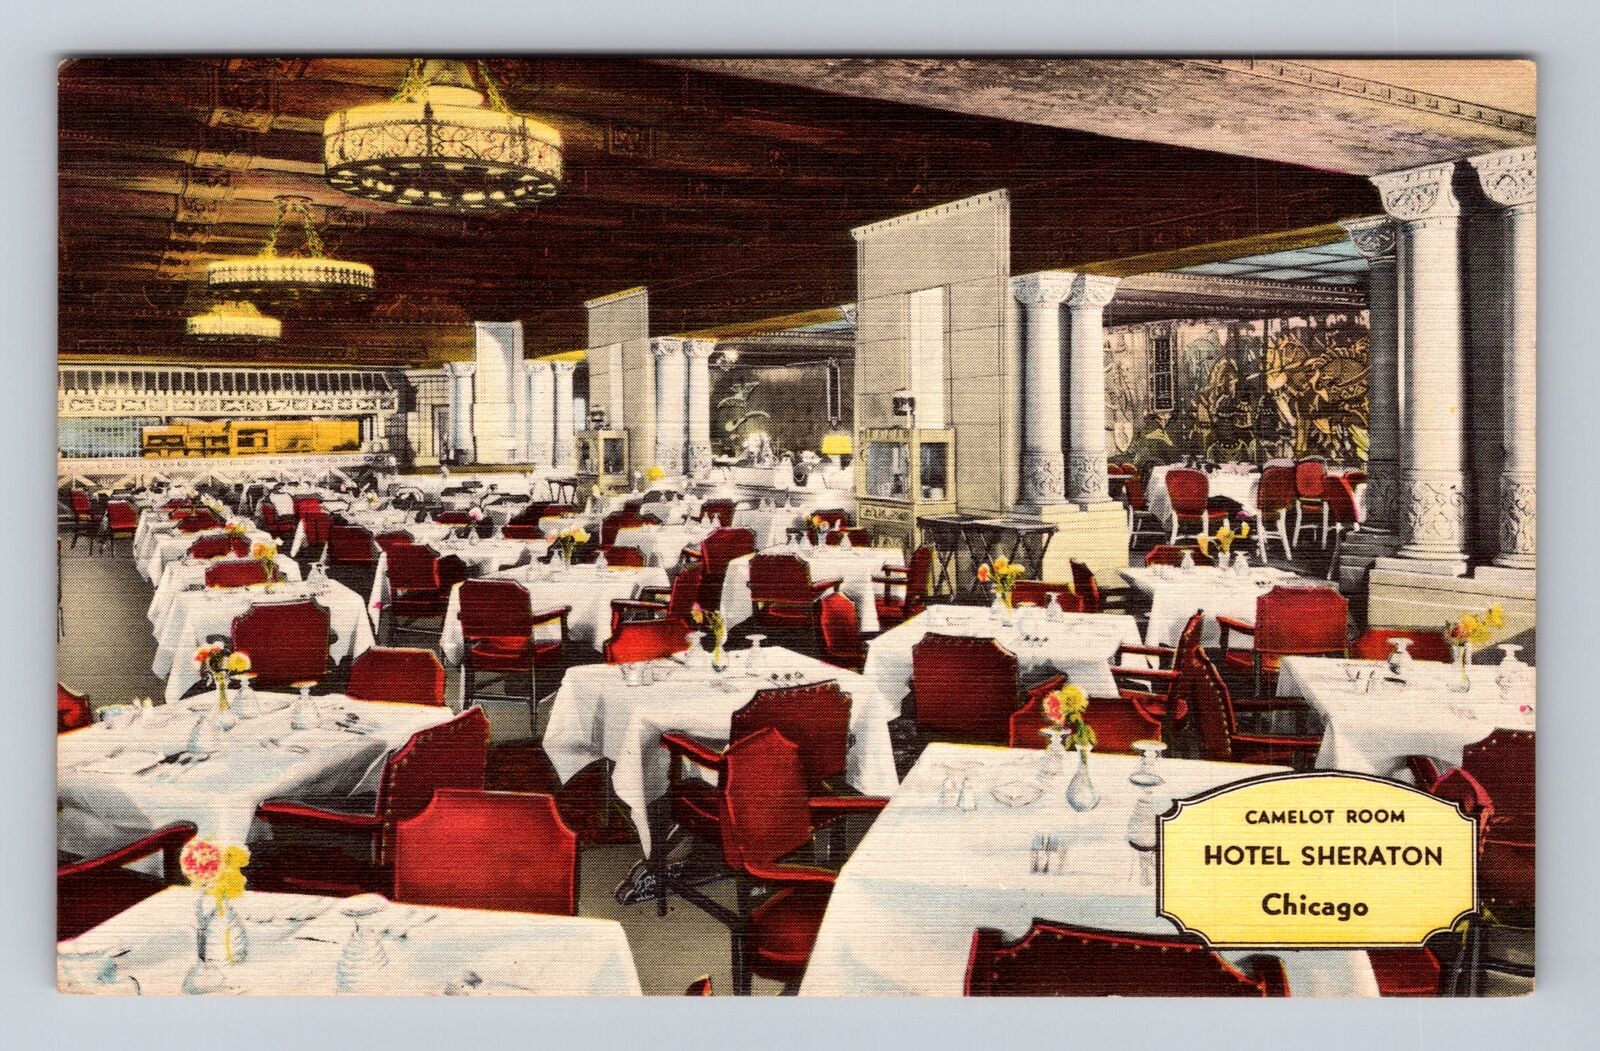 Chicago IL-Illinois, Hotel Sheraton Camelot Room, Advertising Vintage Postcard